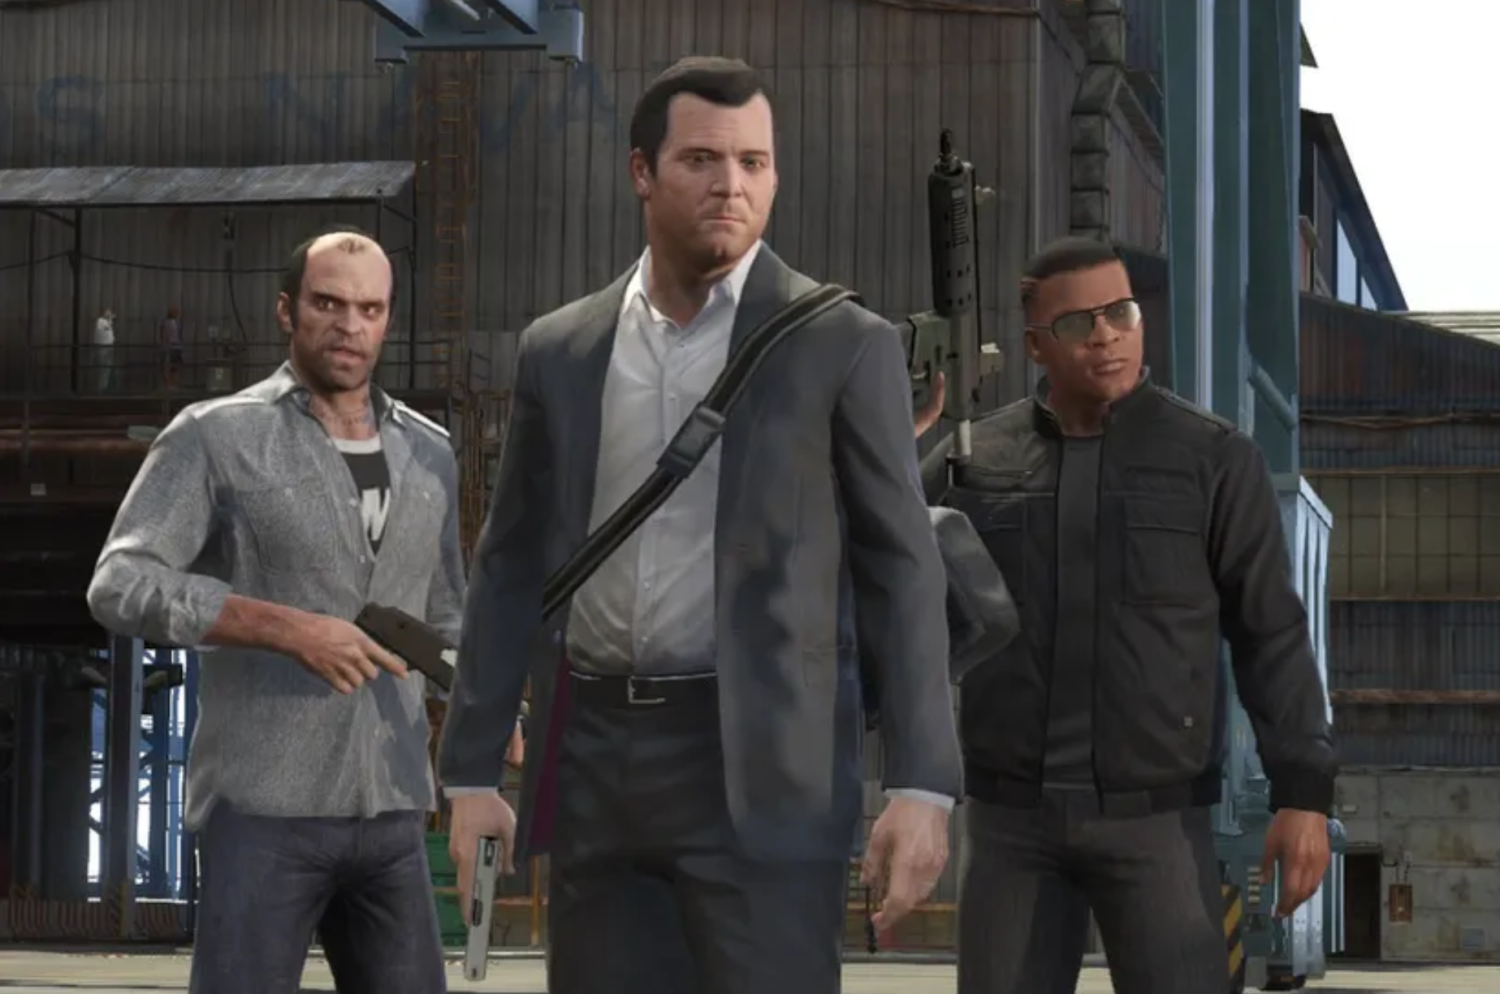 Rockstar acquires team behind popular FiveM GTA Online mod